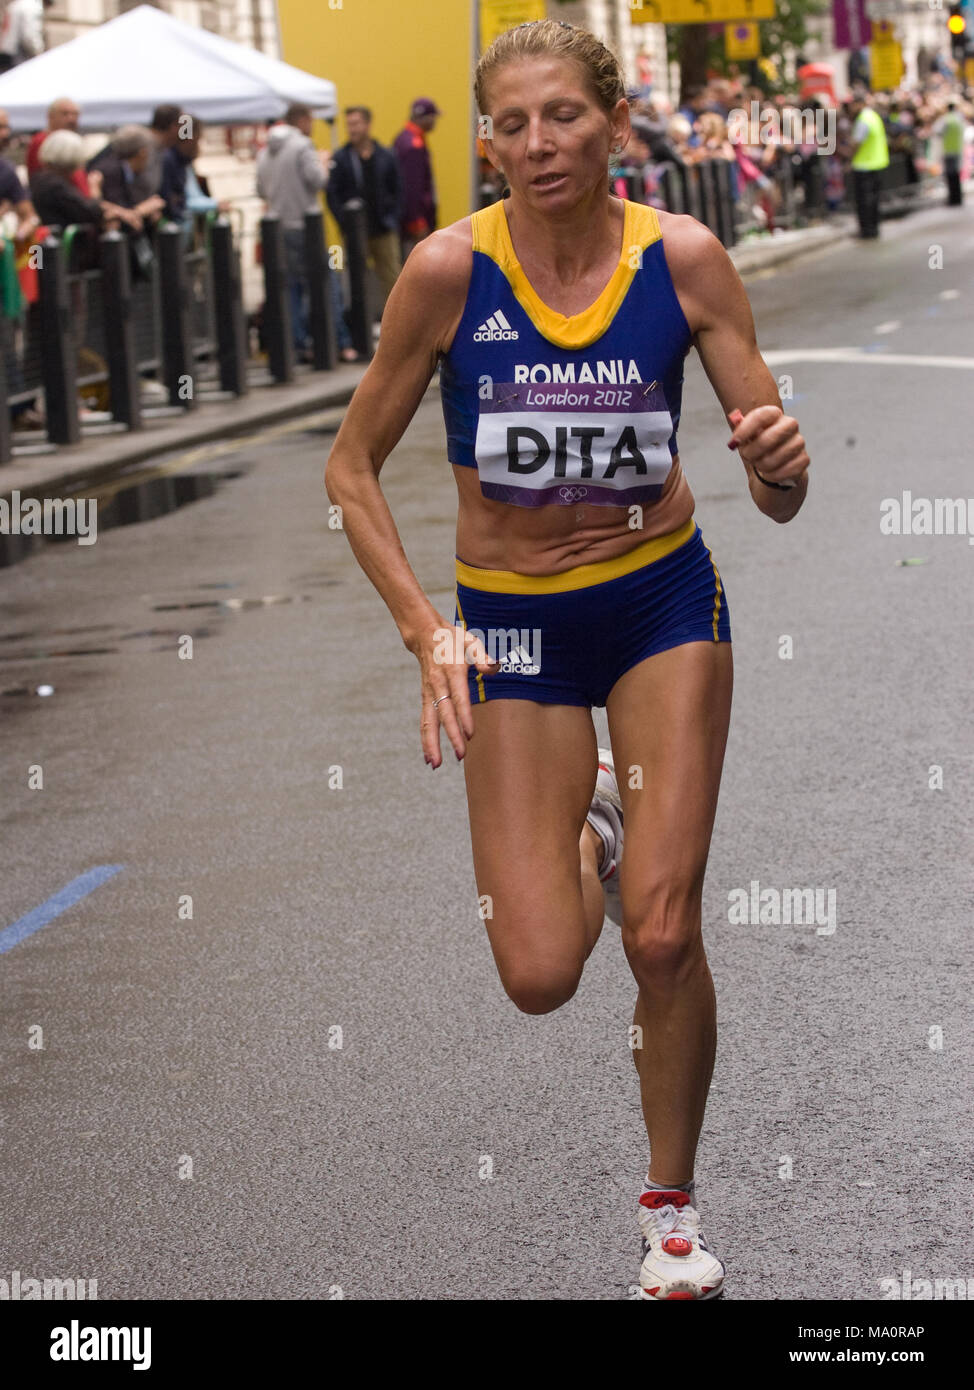 Olympic Games - London 2012 - Women's Marathon Race Stock Photo